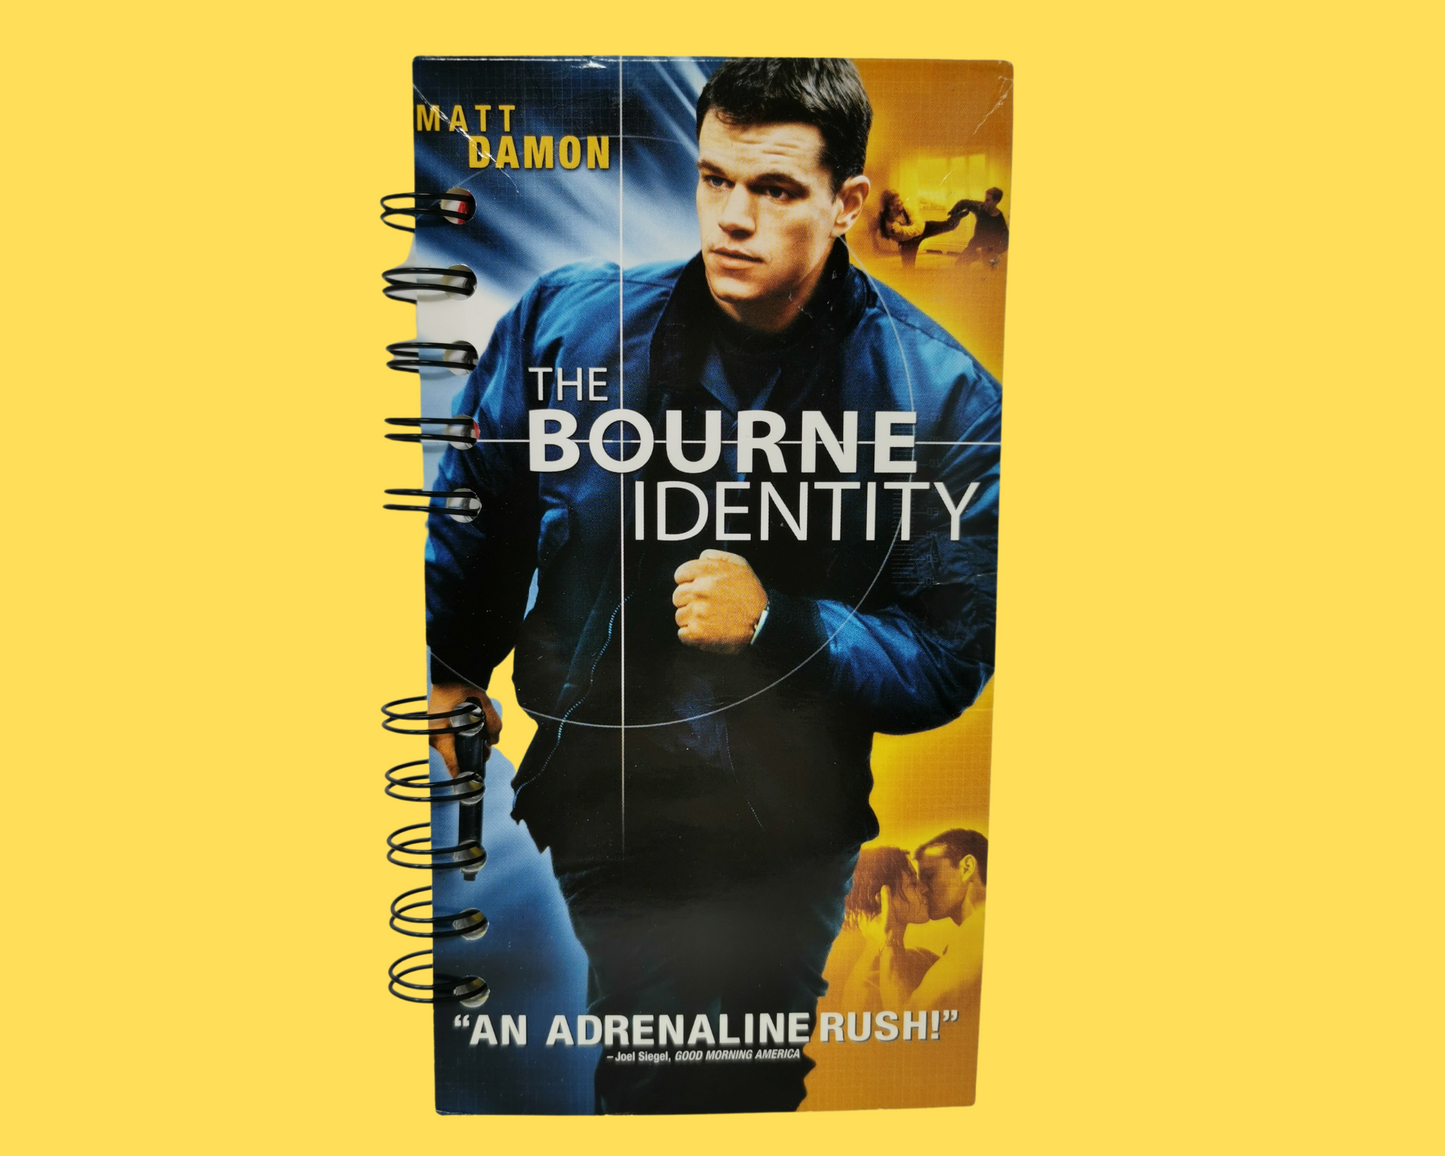 Carnet de film VHS The Bourne Identity